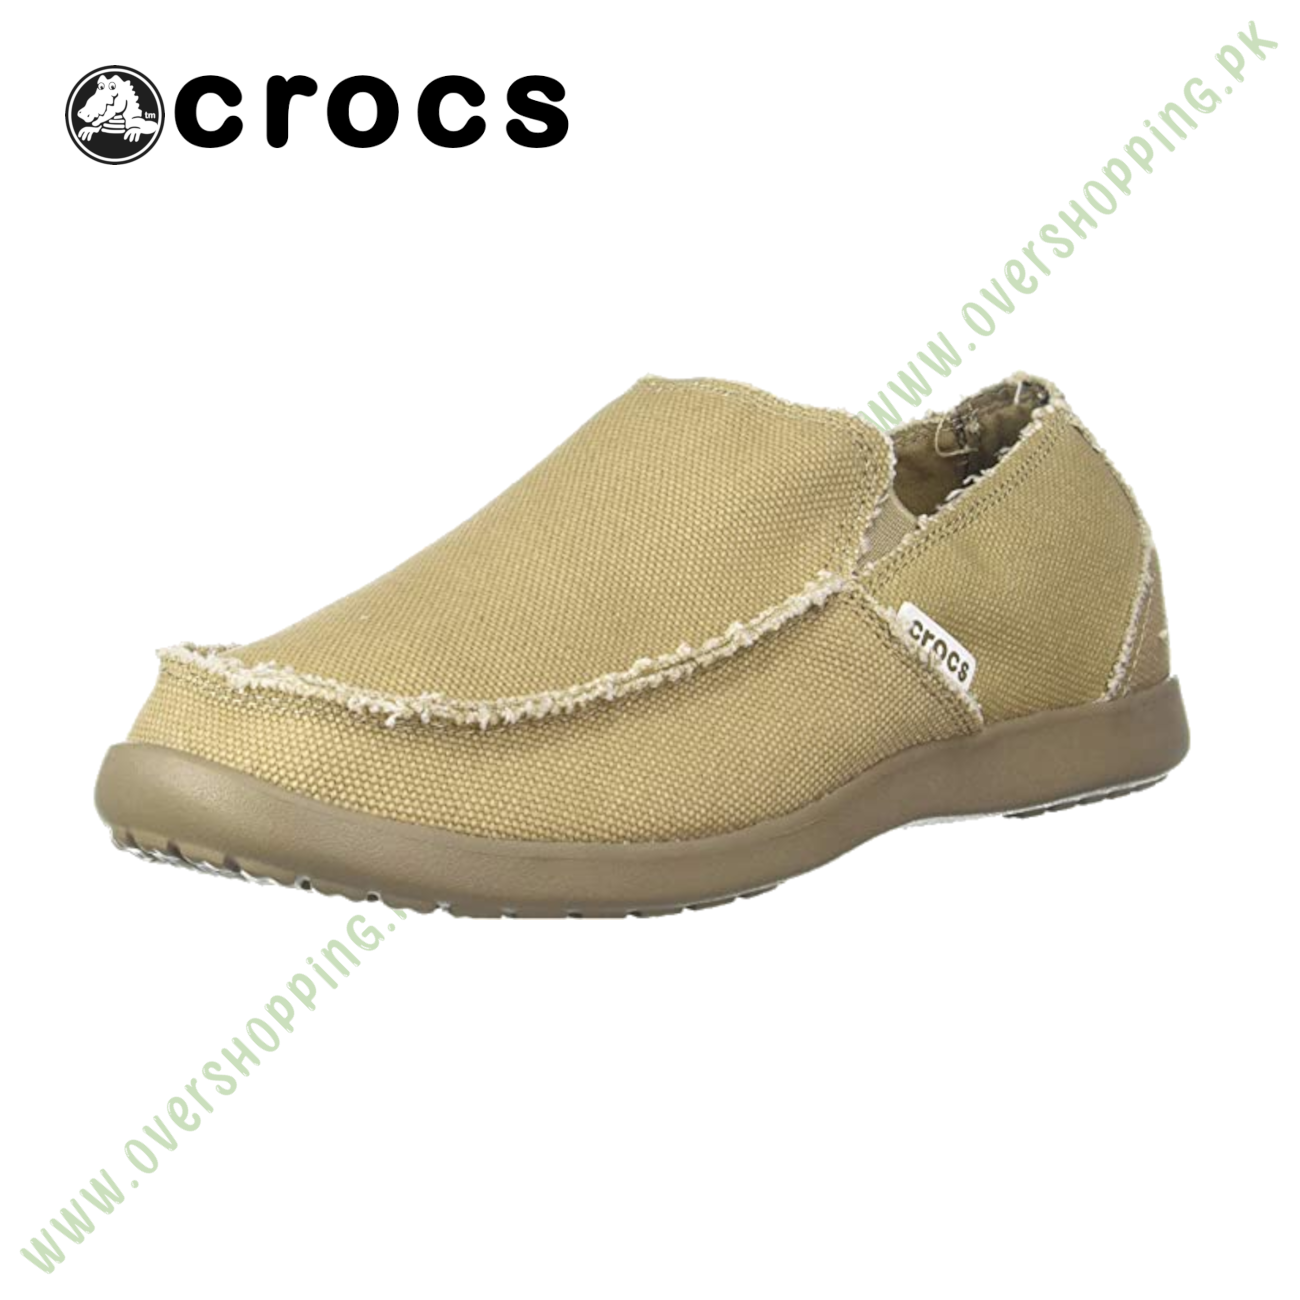 Crocs Men s Santa Cruz Slip-On Loafer,Khaki,11 (D)M US